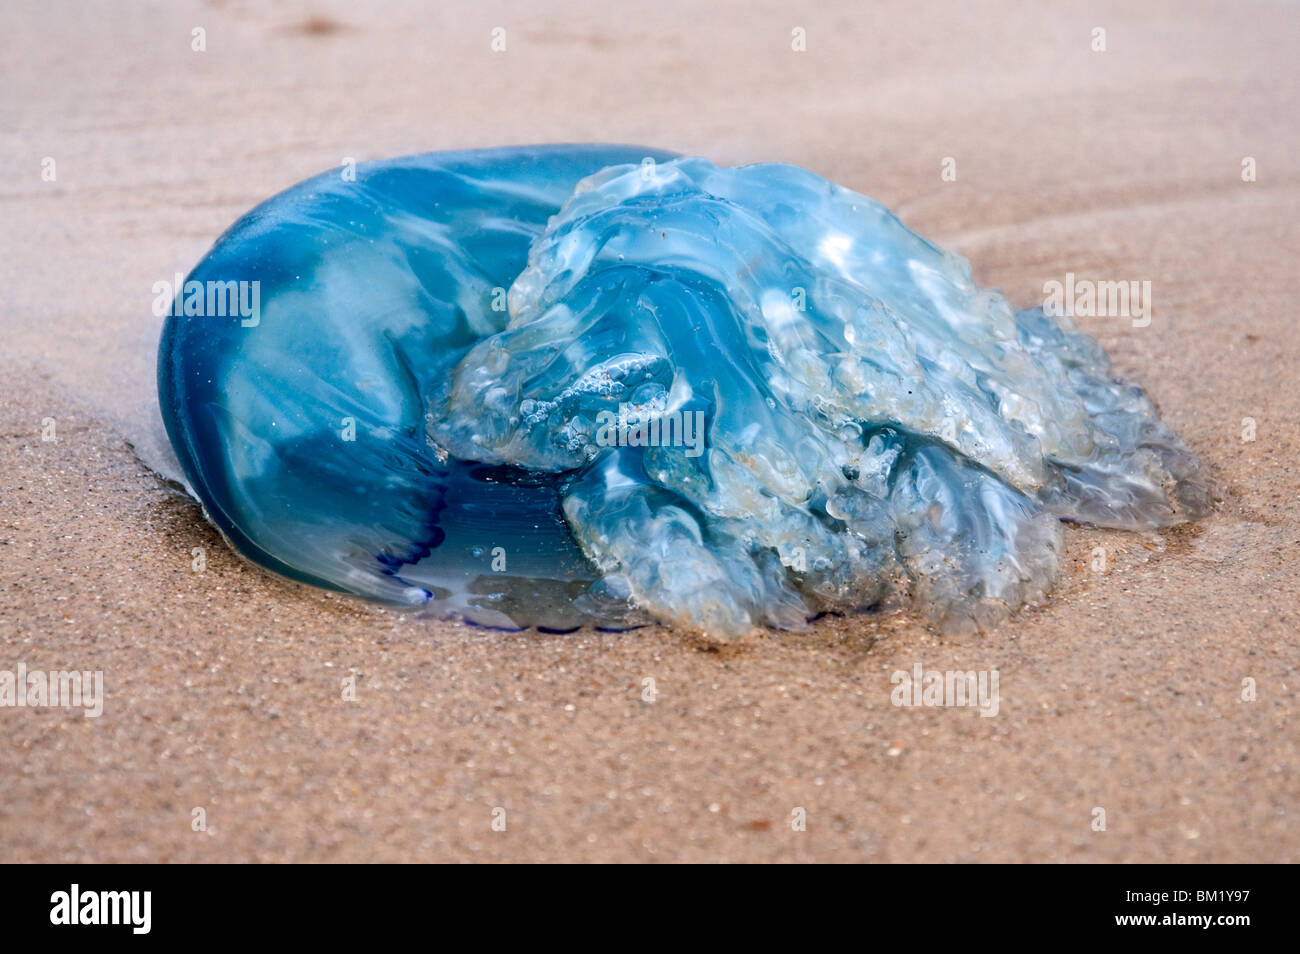 Barrel jellyfish (Rhizostoma octopus) stranded on beach, Belgium Stock Photo